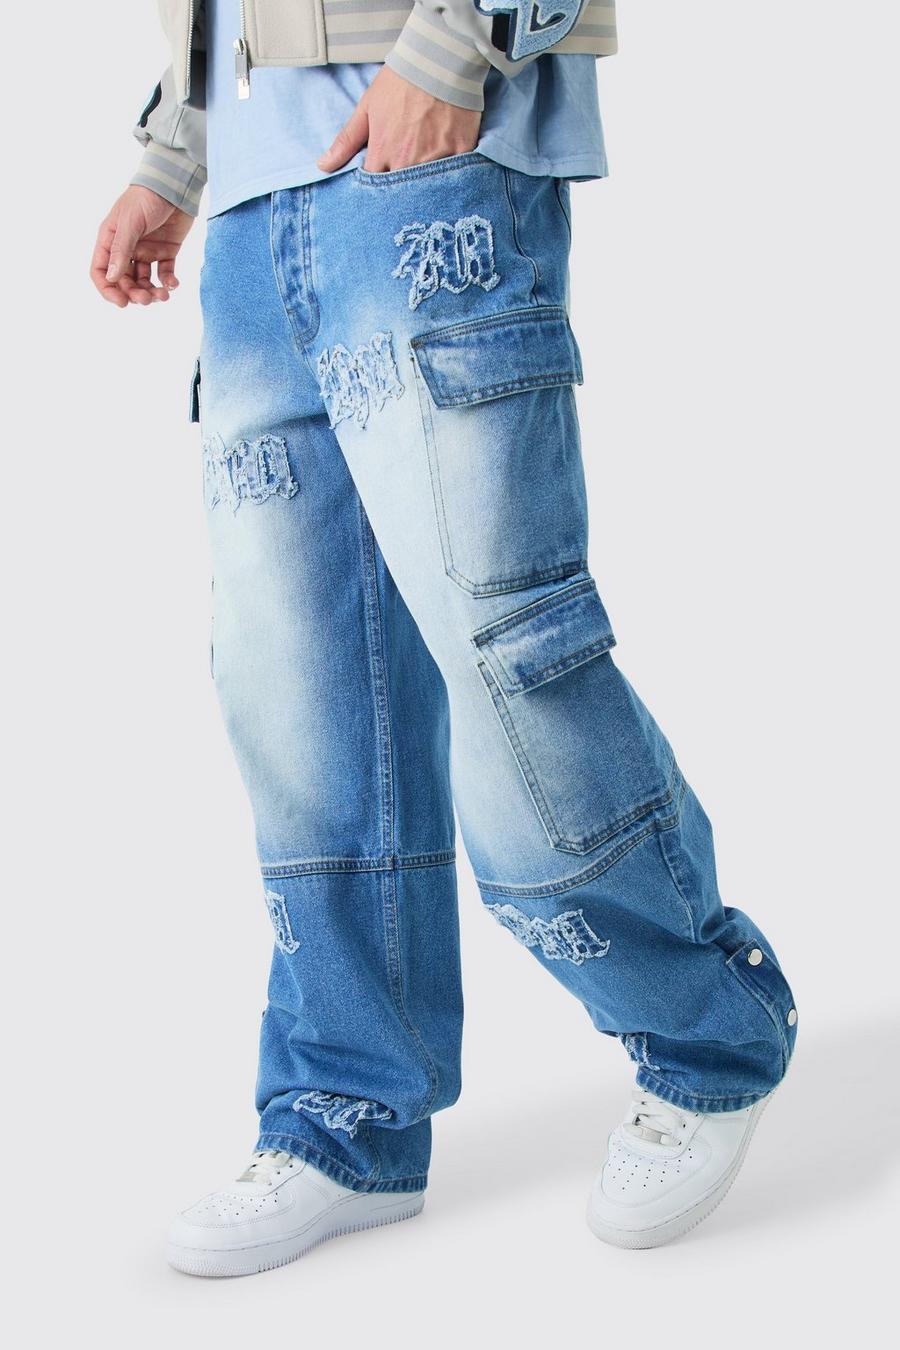 Jeans extra comodi in denim rigido con applique BM e tasche Cargo, Light blue